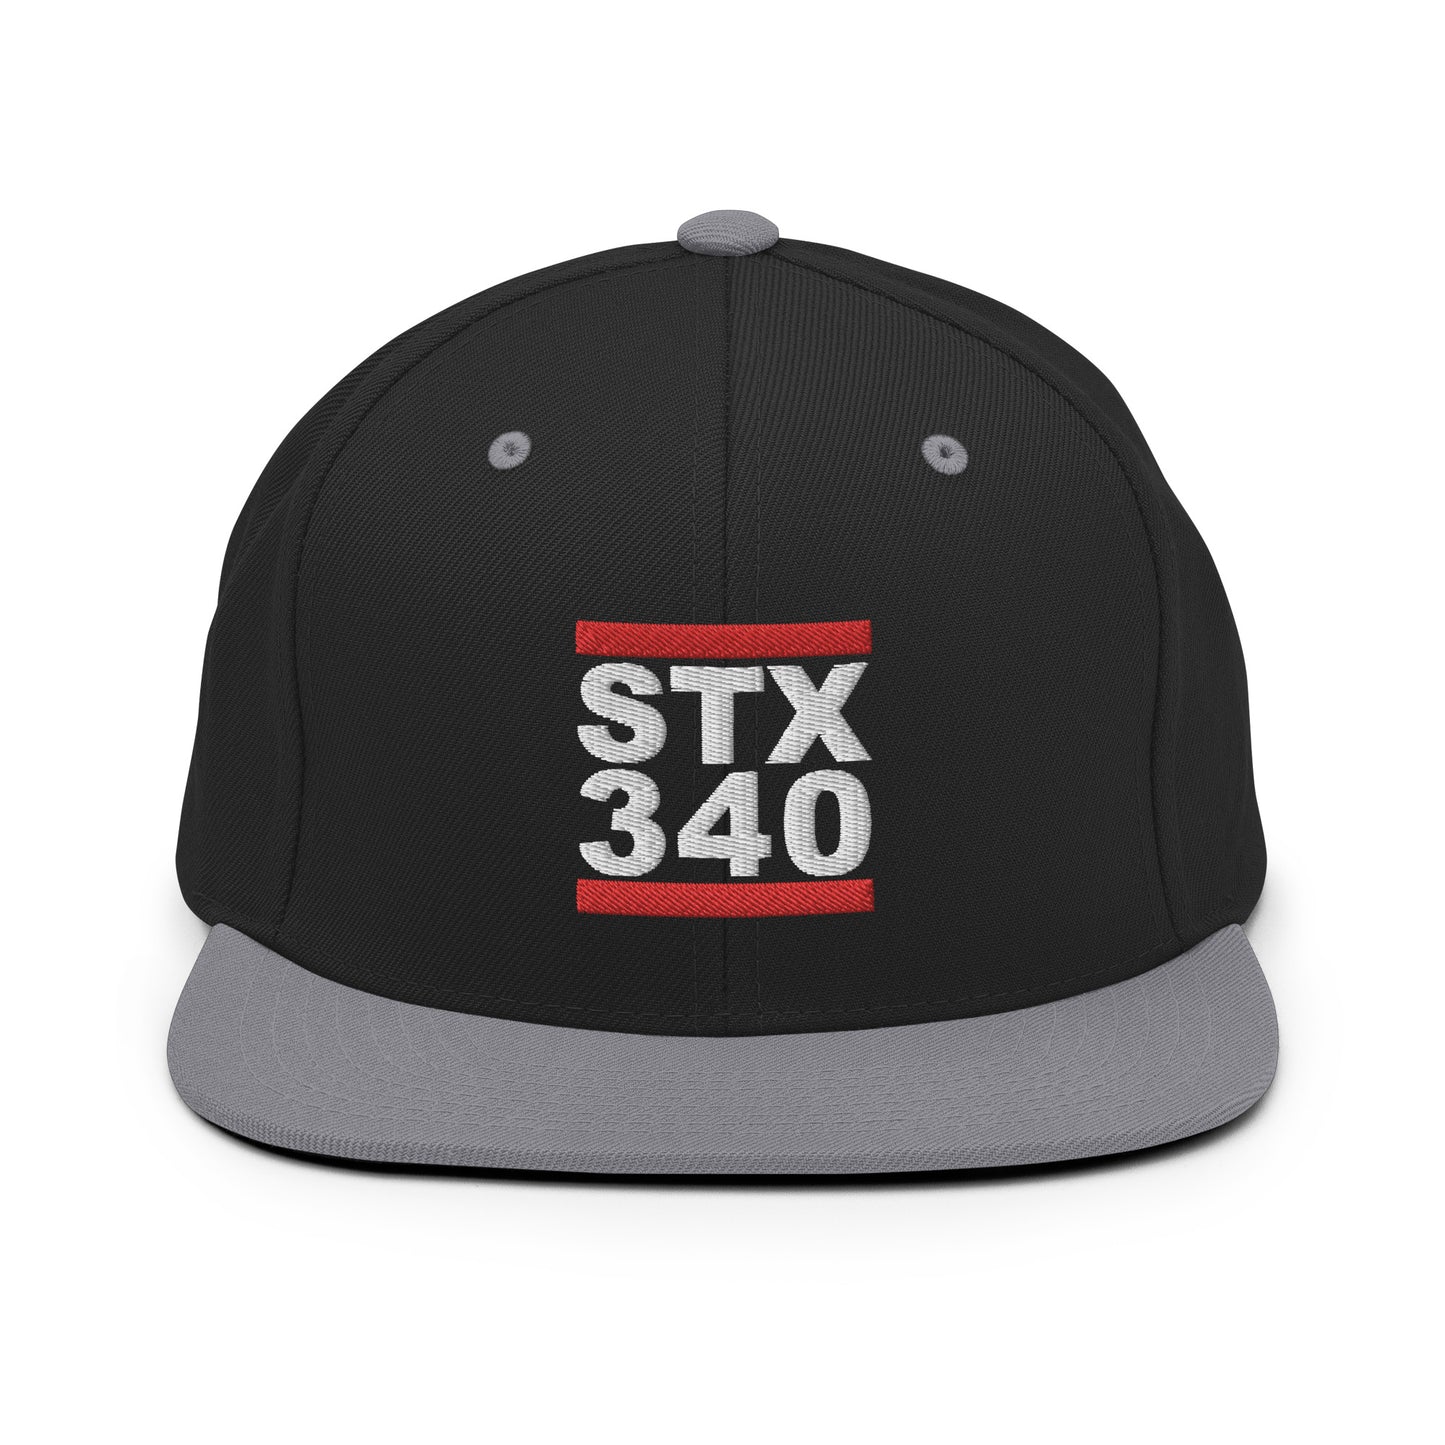 Stx 340 Snapback Hat | Phade Fashion Virgin Islands